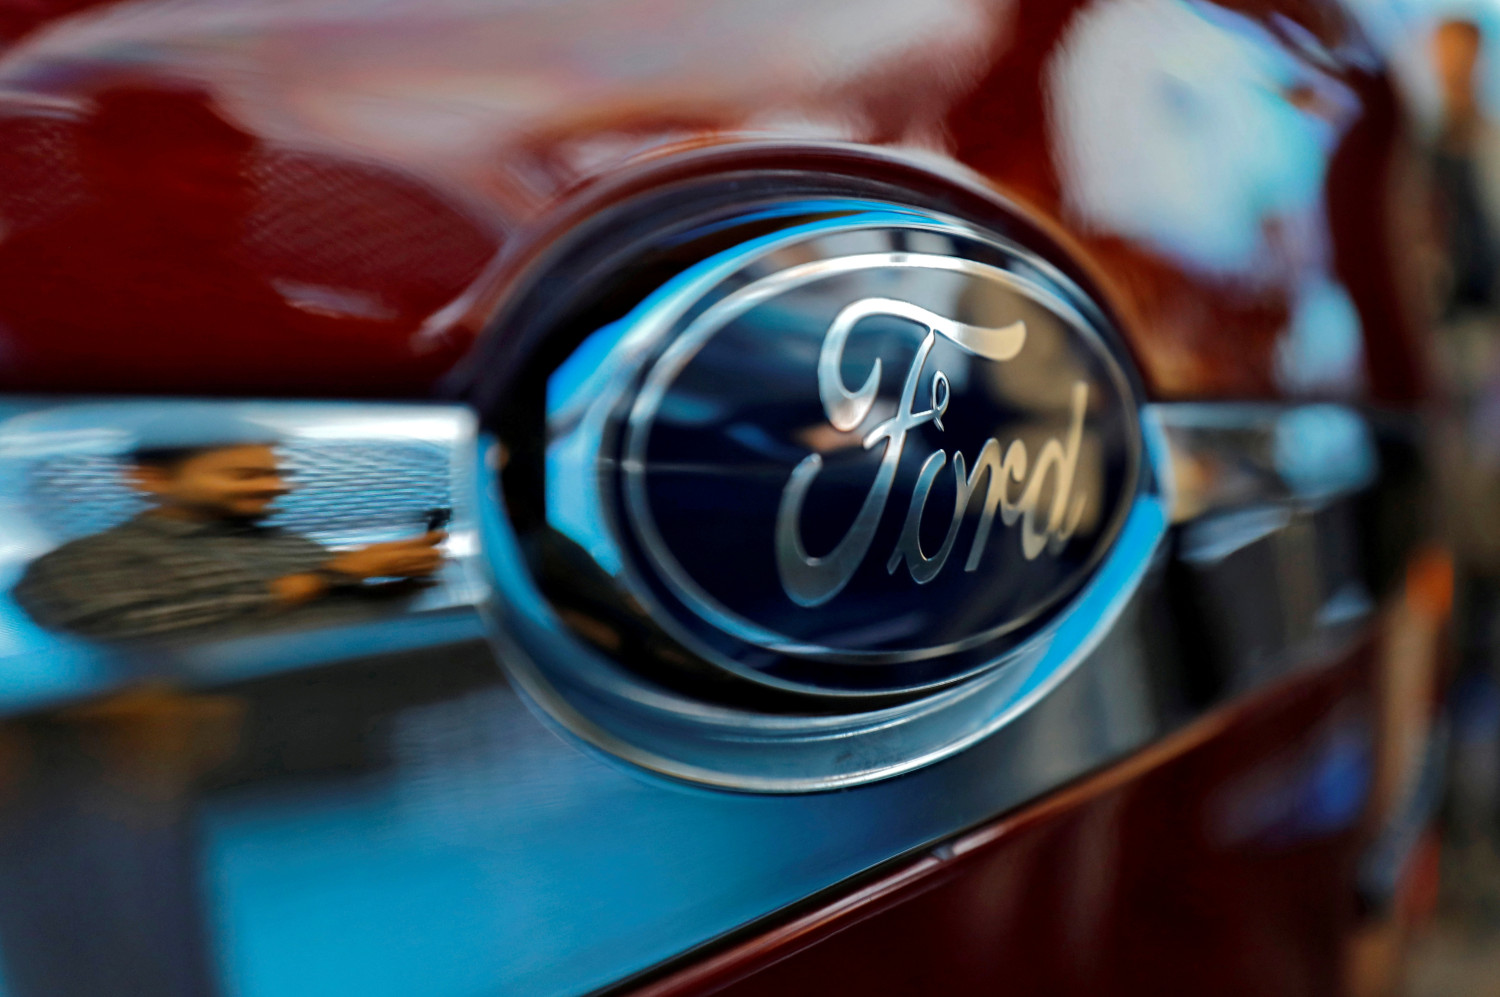 ford va arreter sa production de voitures en inde 20220920081815 